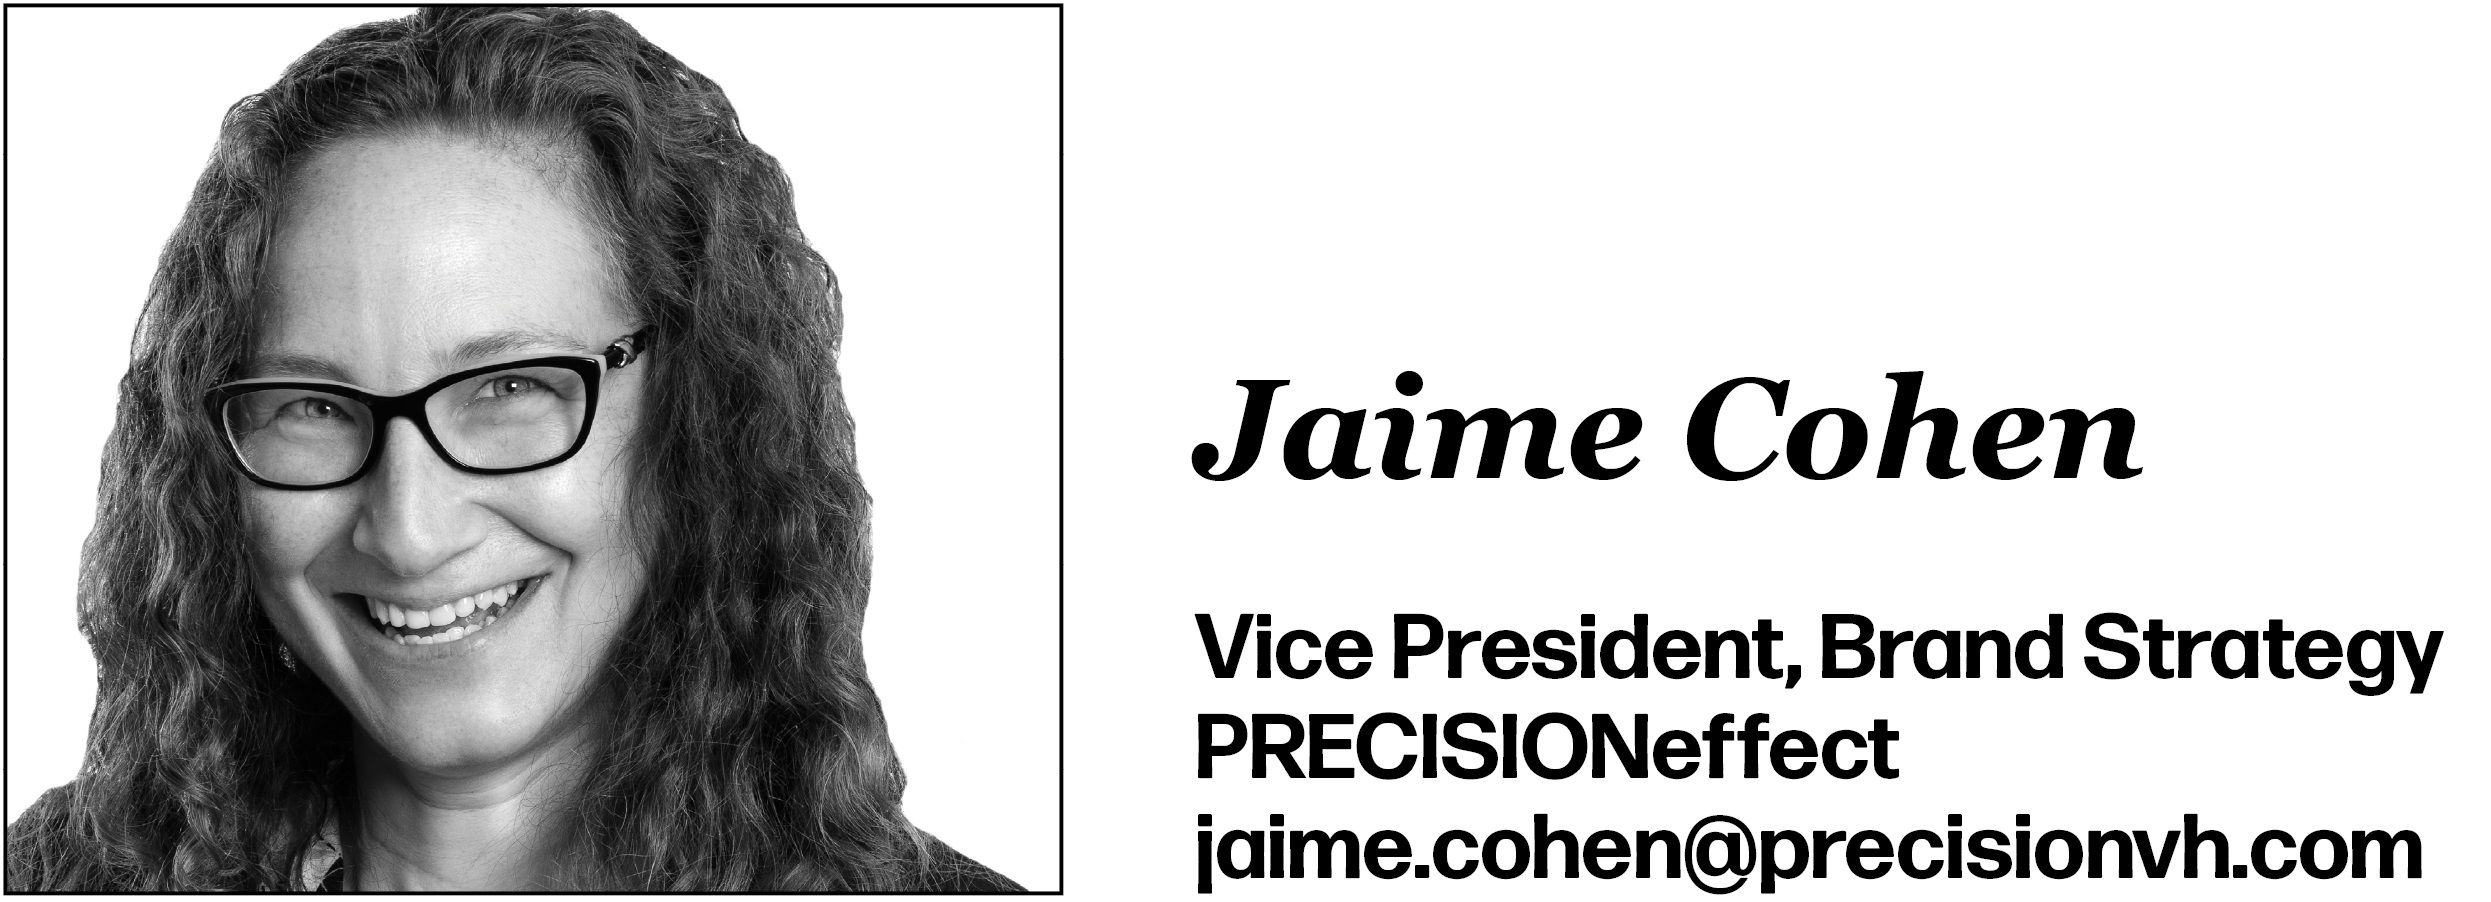 Jaime Cohen Vice President, Brand Strategy PRECISIONeffect jaime.cohen@precisionvh.com